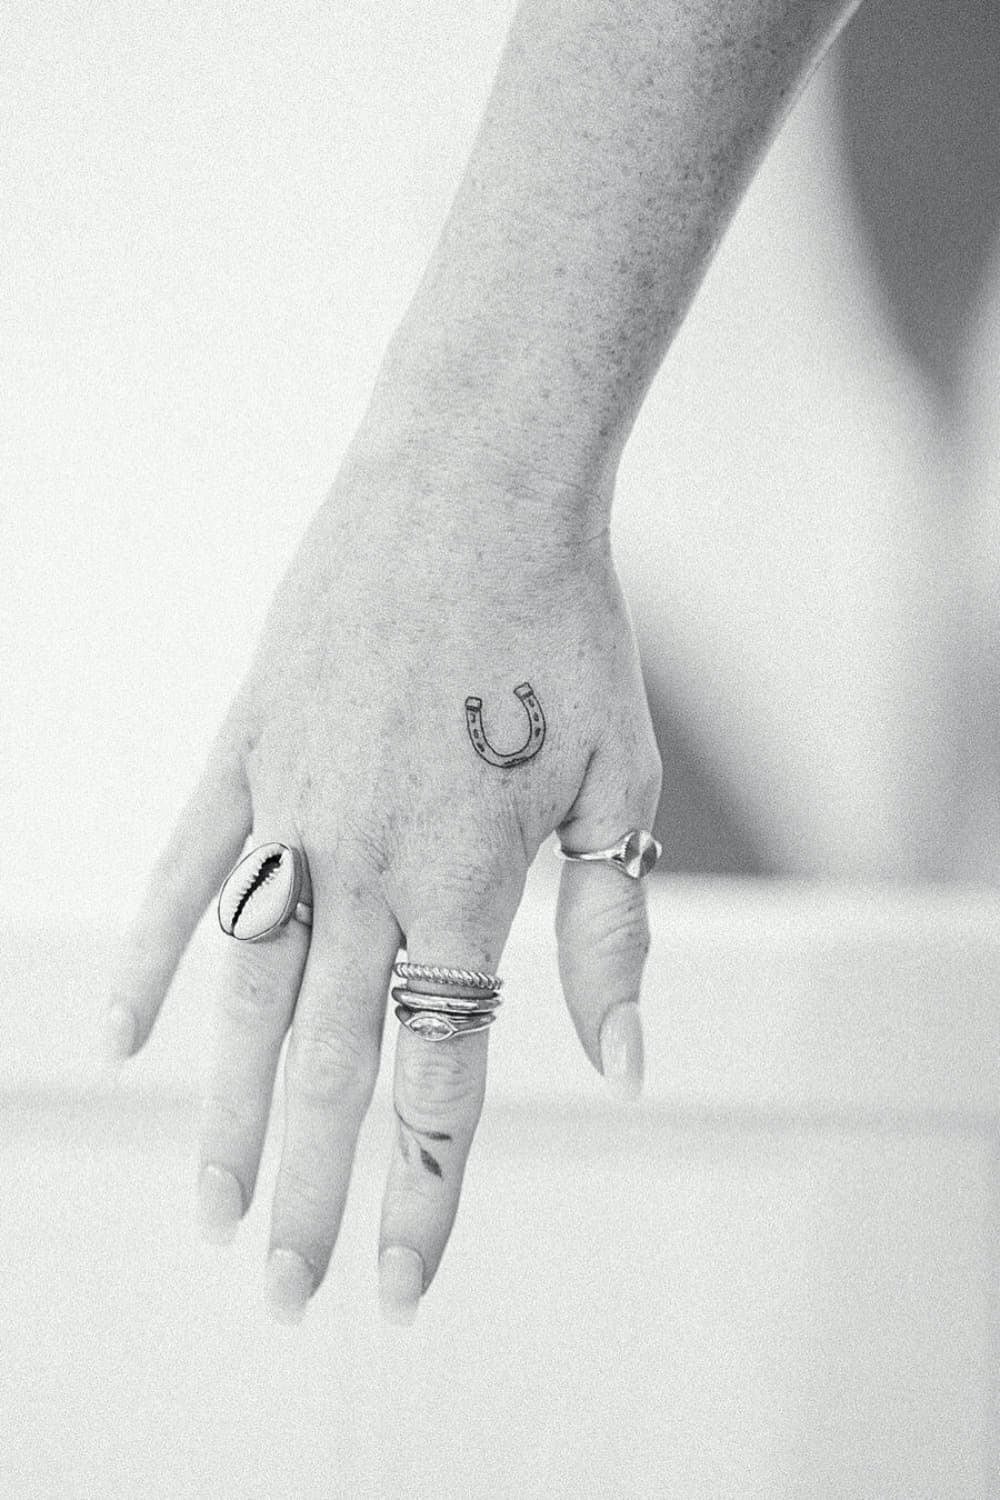 Small Horseshoe Hand Tattoo